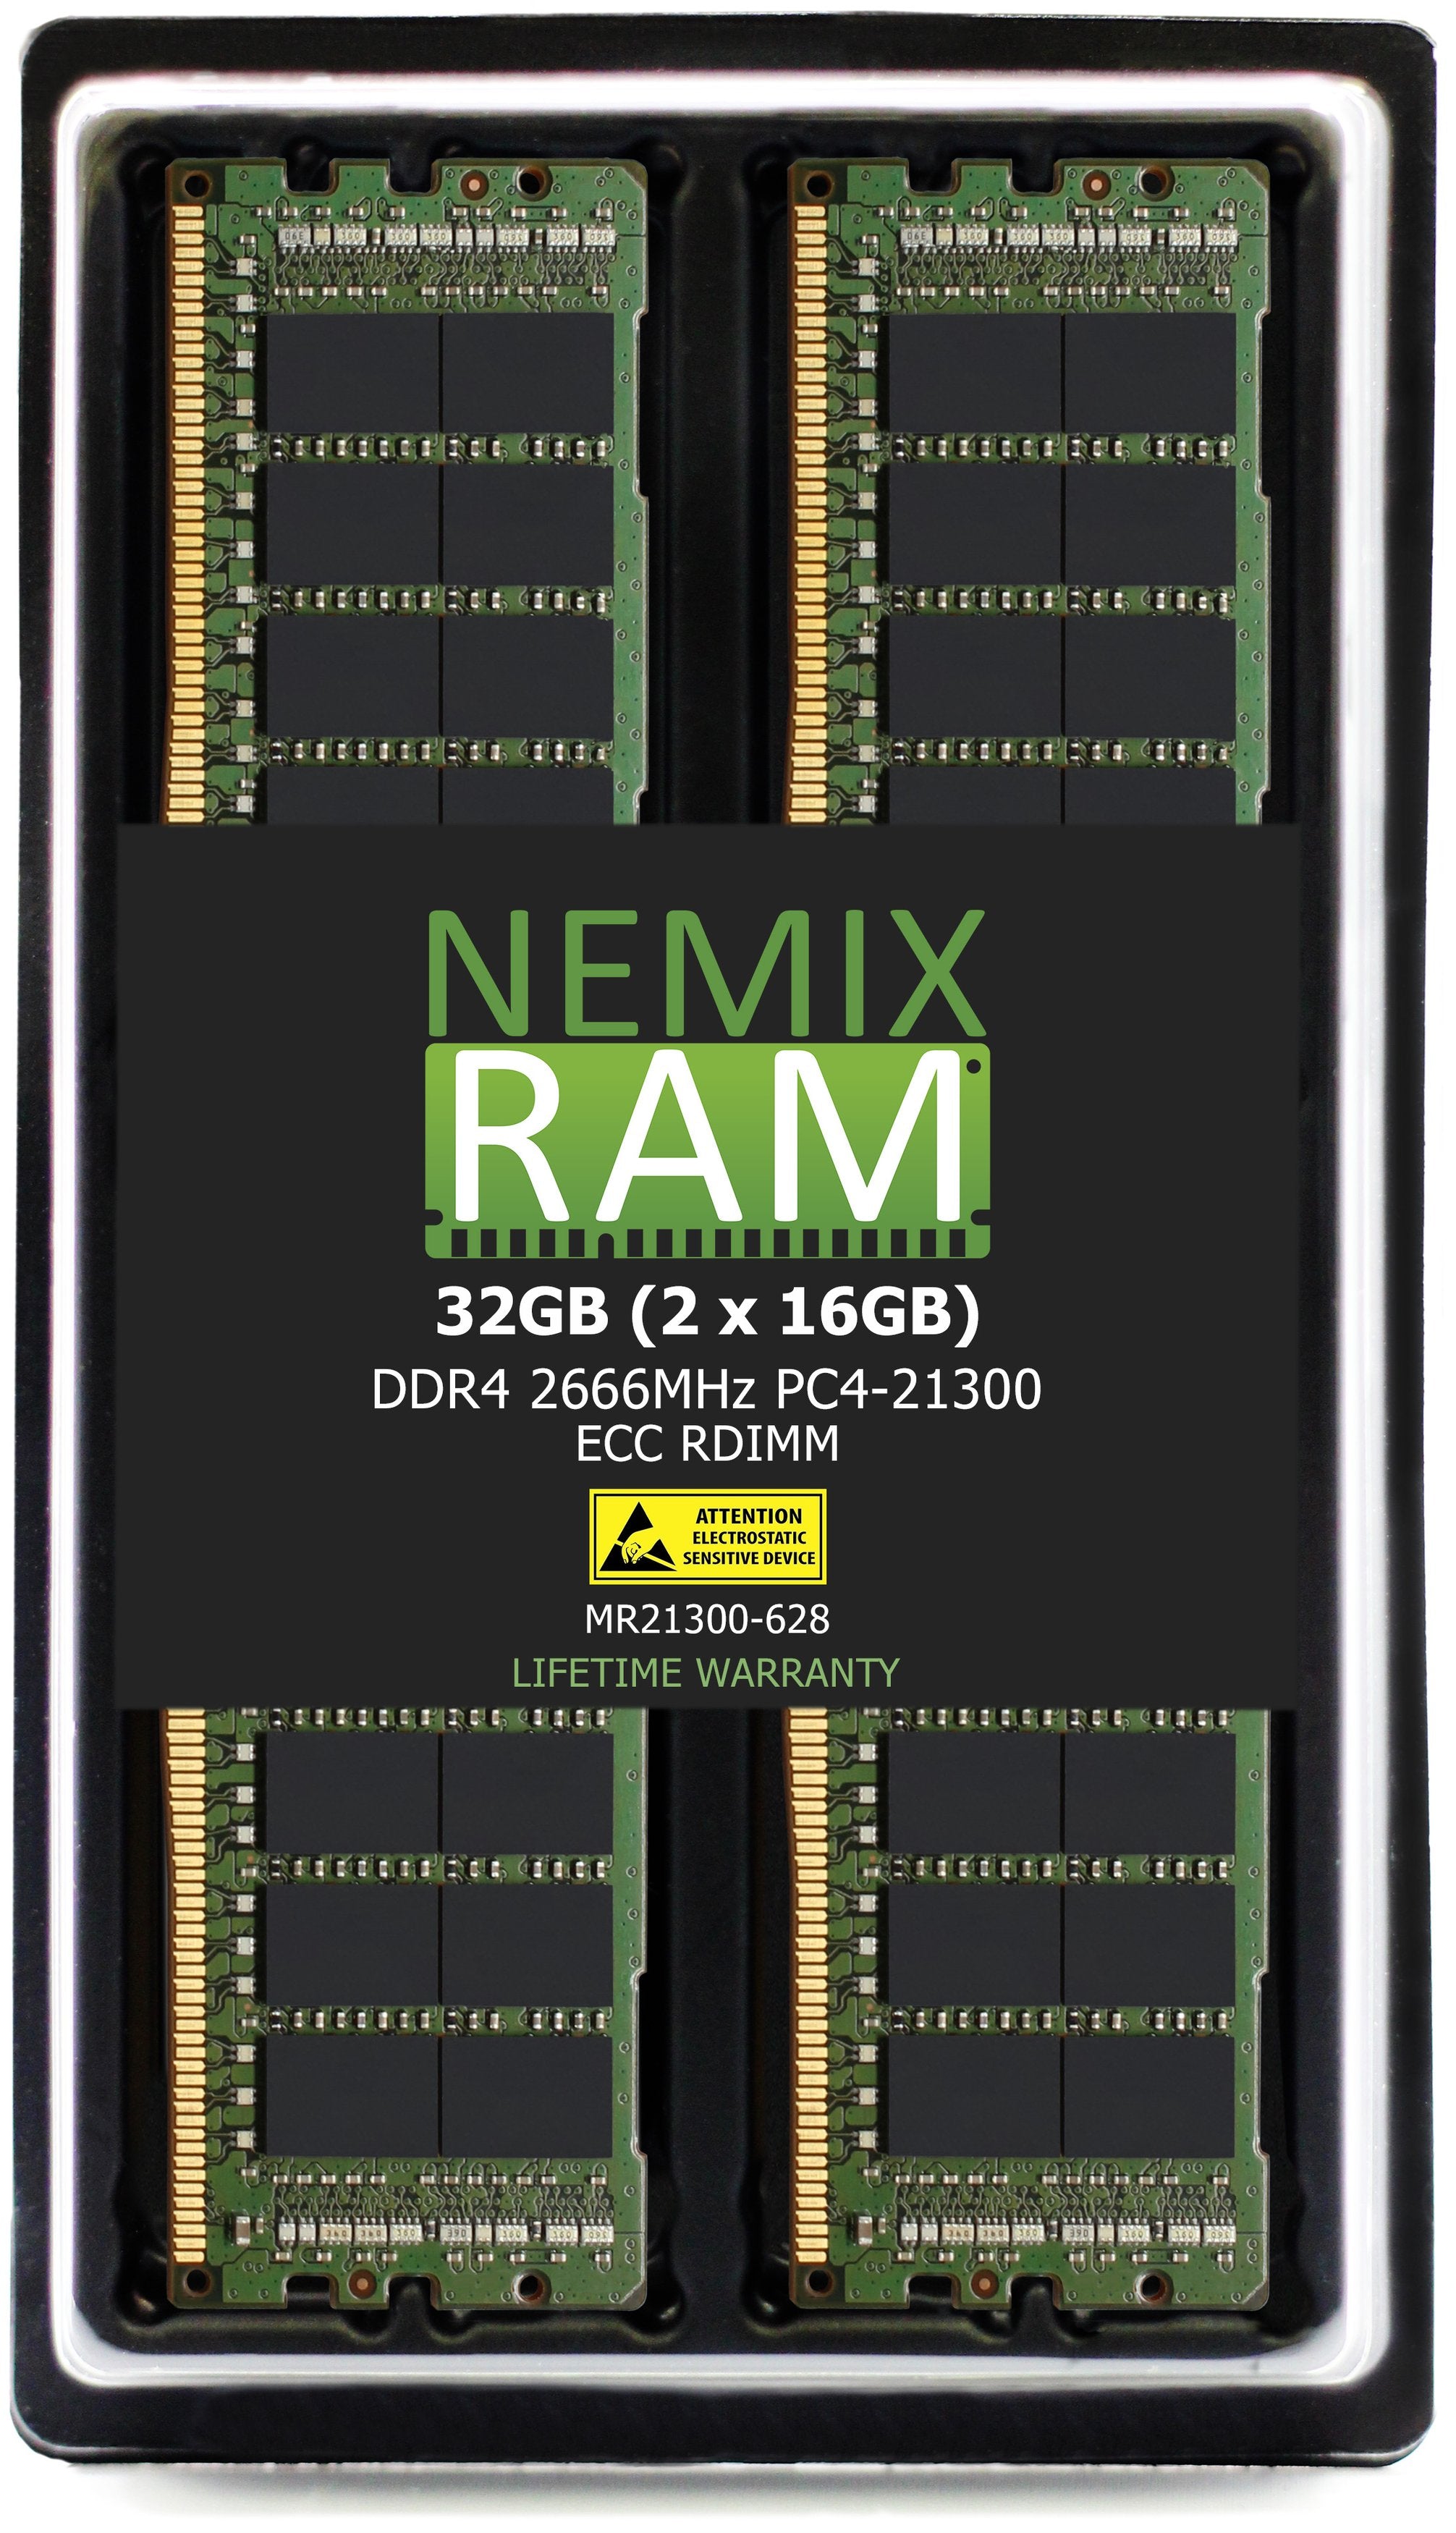 DDR4 2666MHZ PC4-21300 RDIMM 2RX8